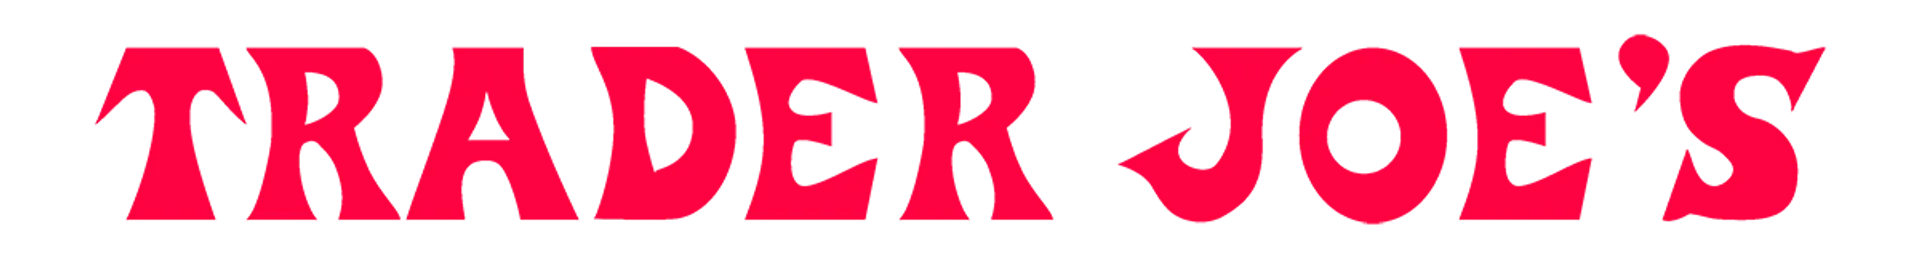 TRADER JOE'S logo de catálogo